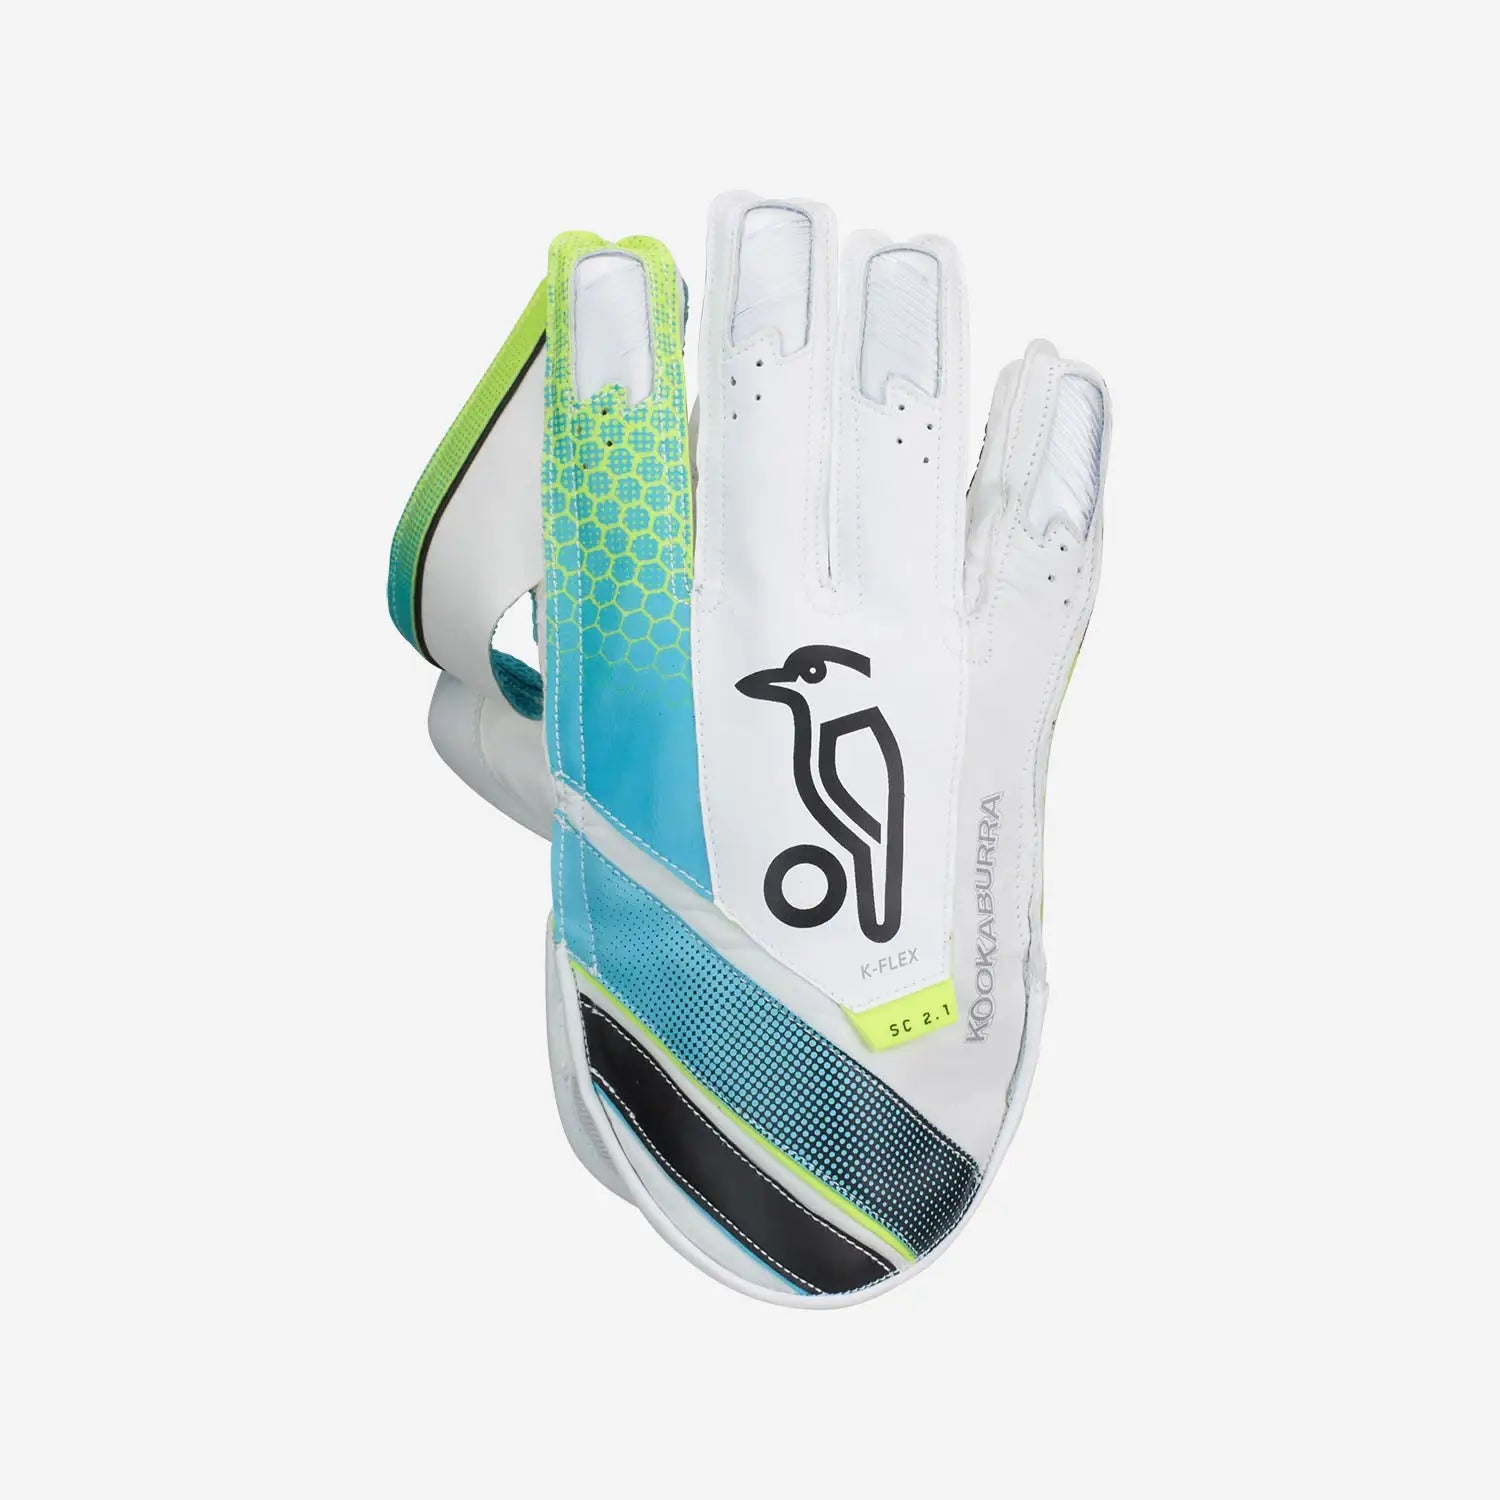 Kookaburra SC 2.1 Wicket Keeping Glove Premium Leather - Adult - GLOVE - WICKET KEEPING